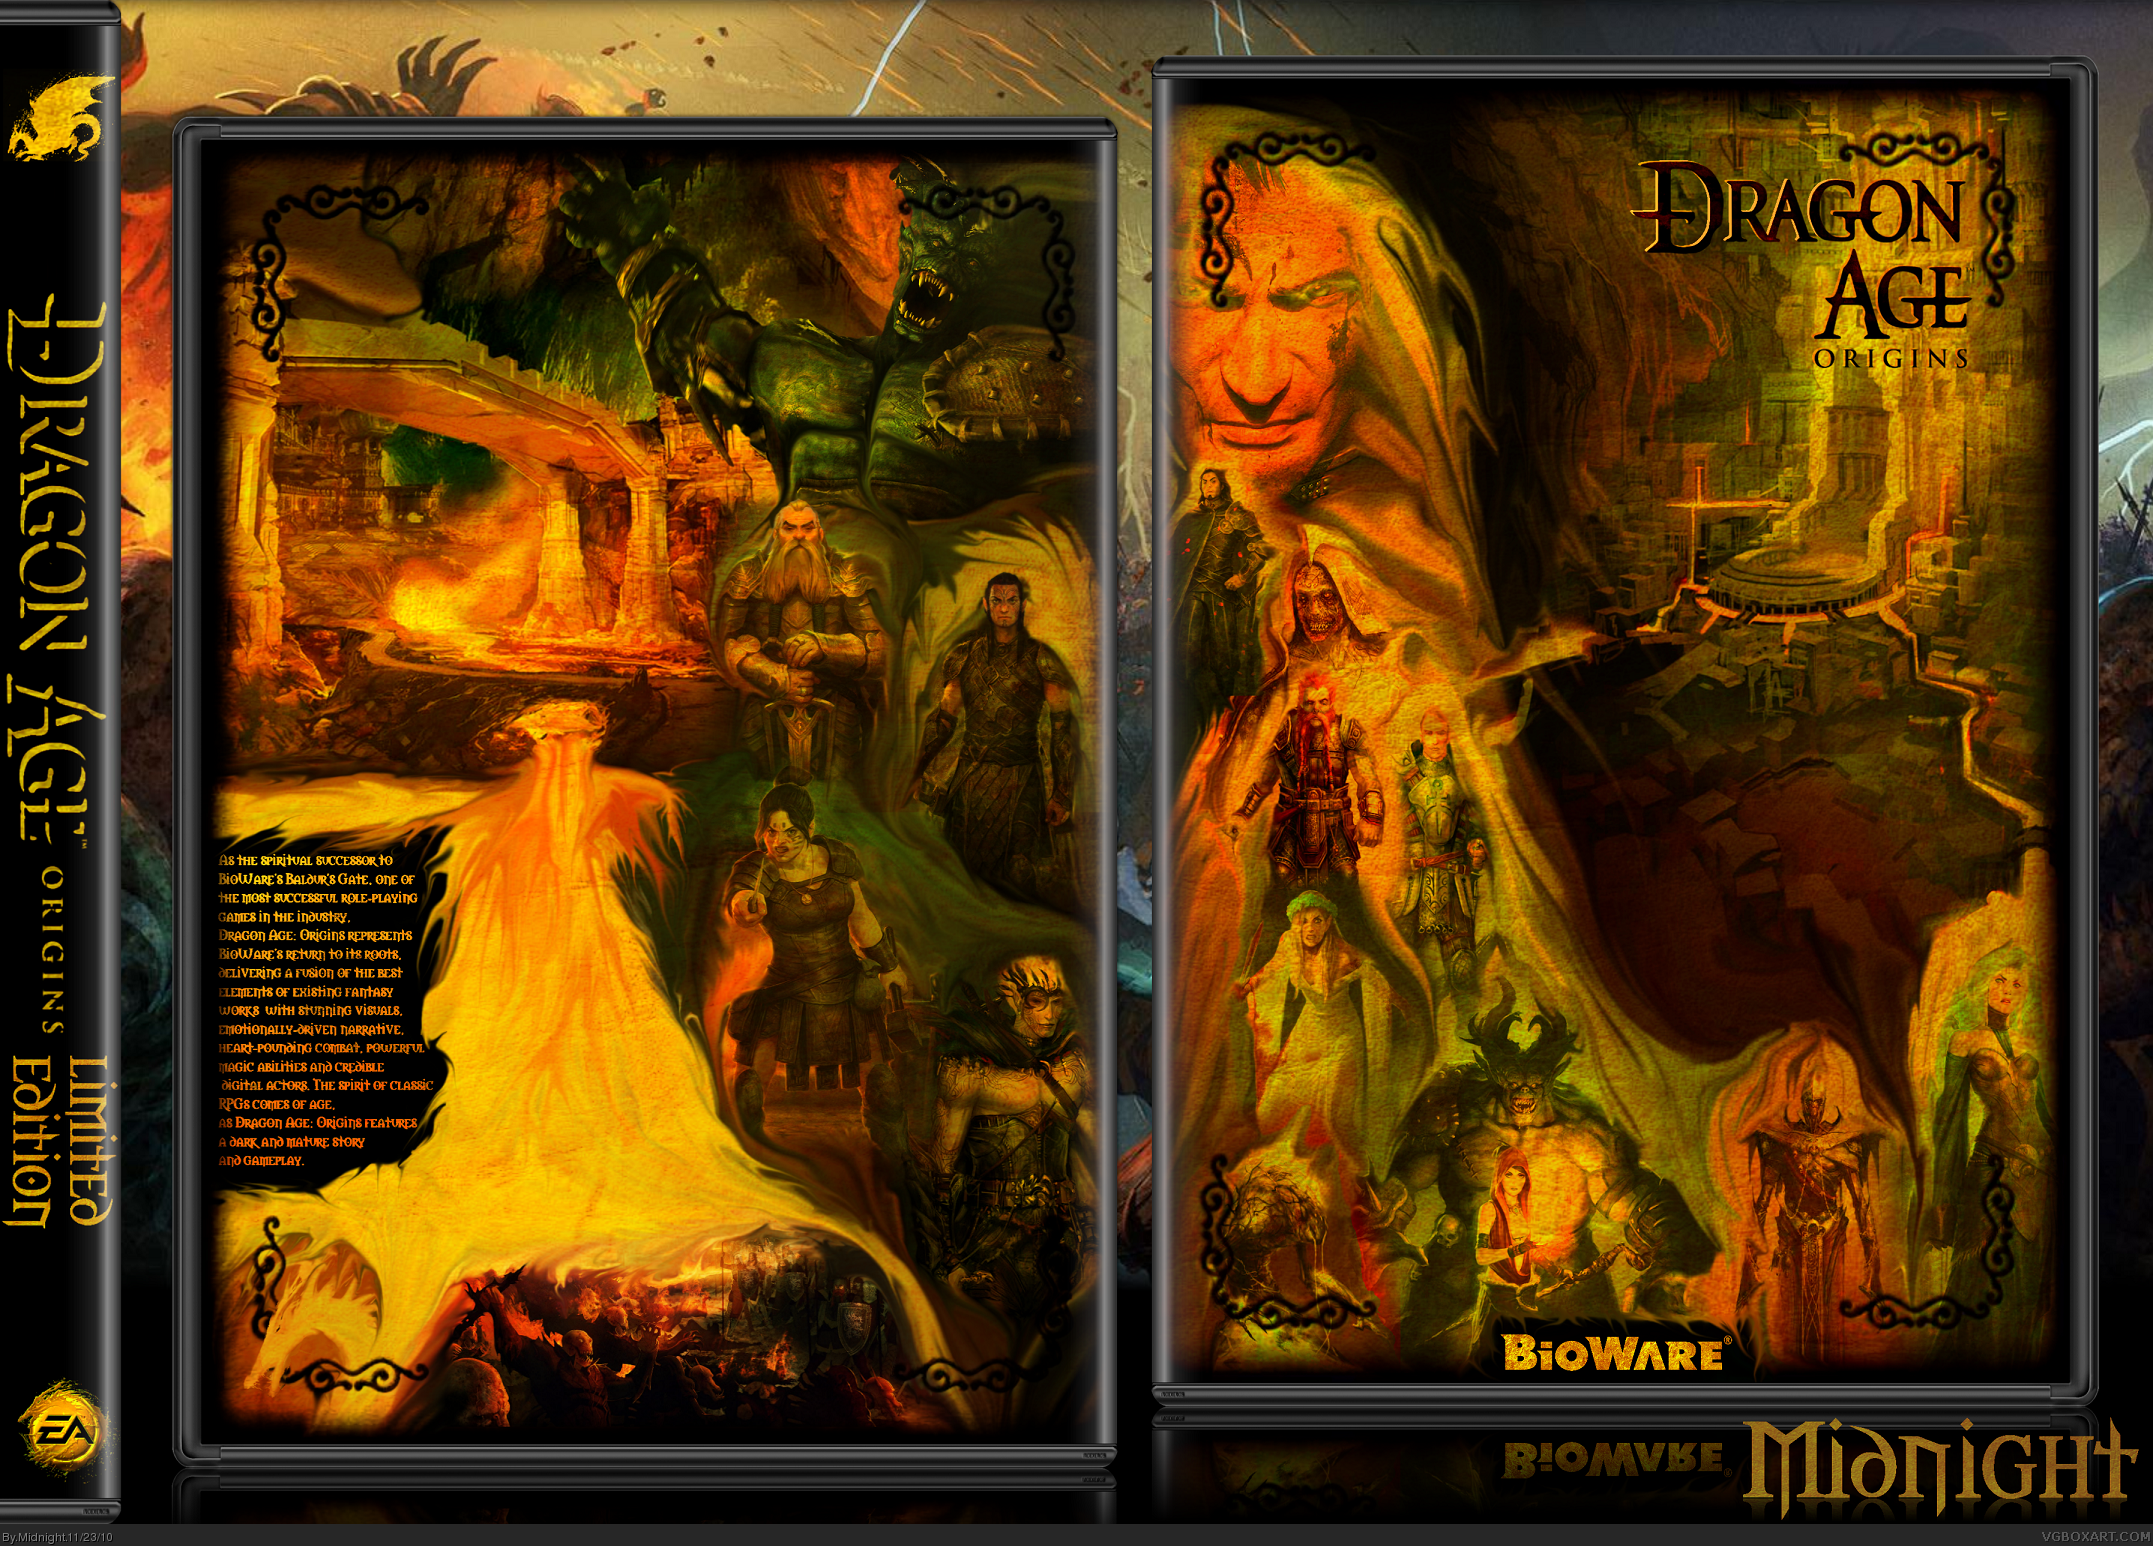 Dragon Age: Origins Limited Edition box cover